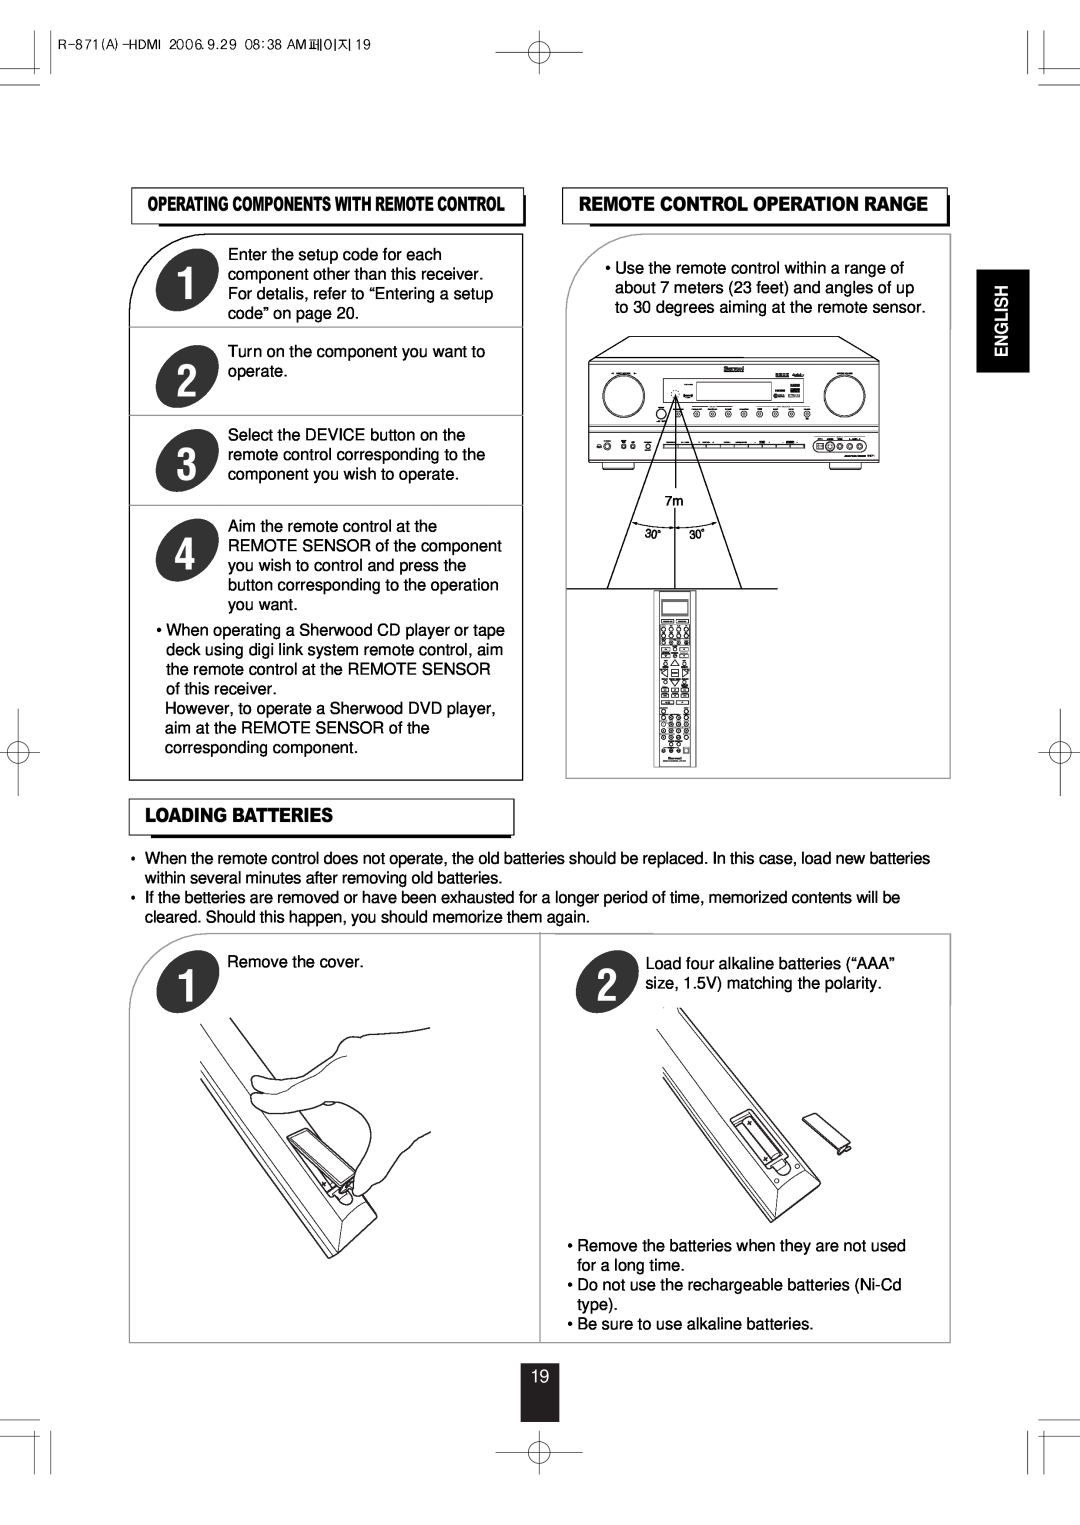 Sherwood R-871 manual Loading Batteries, Remote Control Operation Range, English 